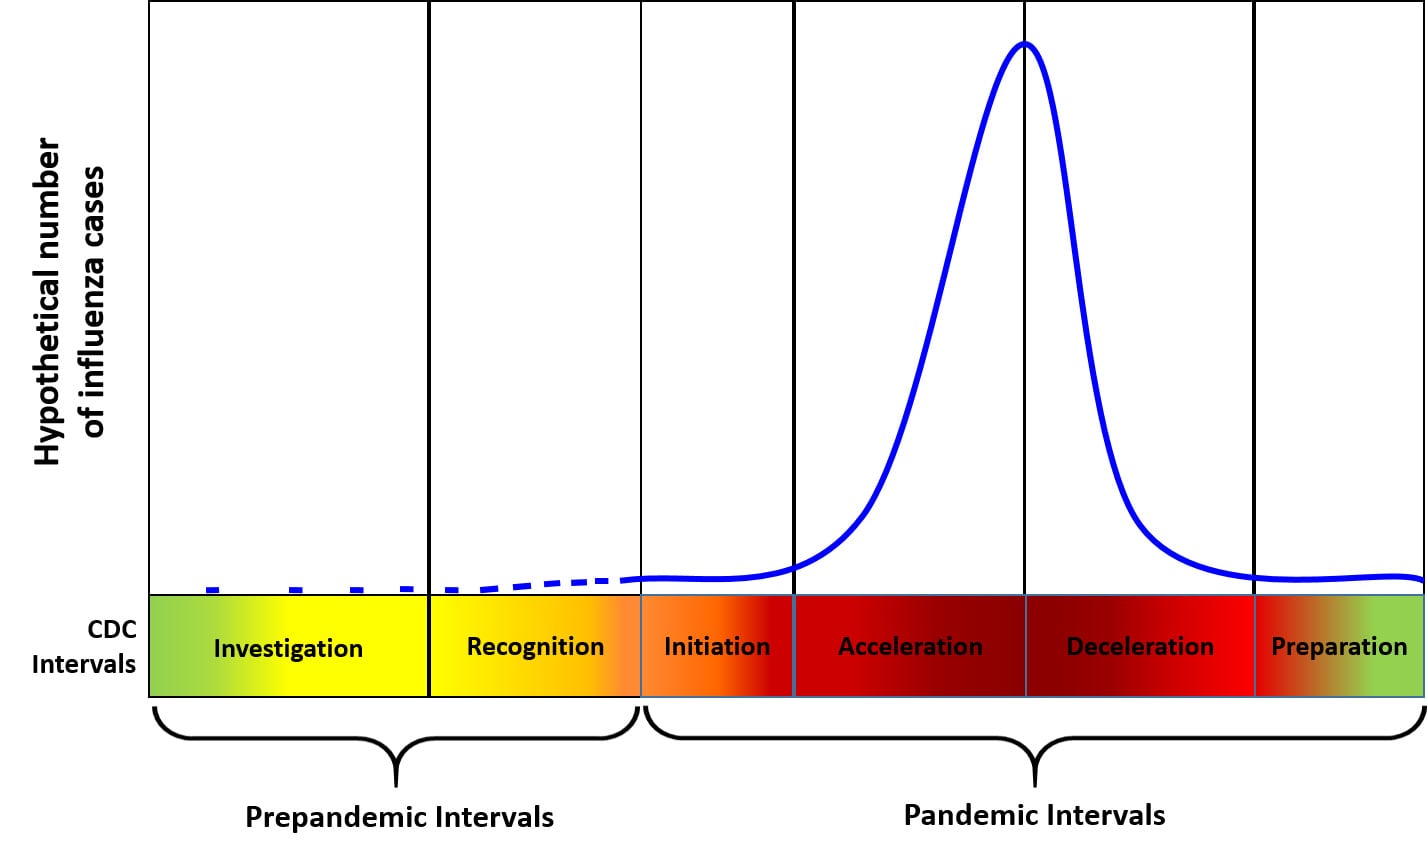 Chart: Preparedness and response framework for novel influenza A virus pandemics: CDC intervals